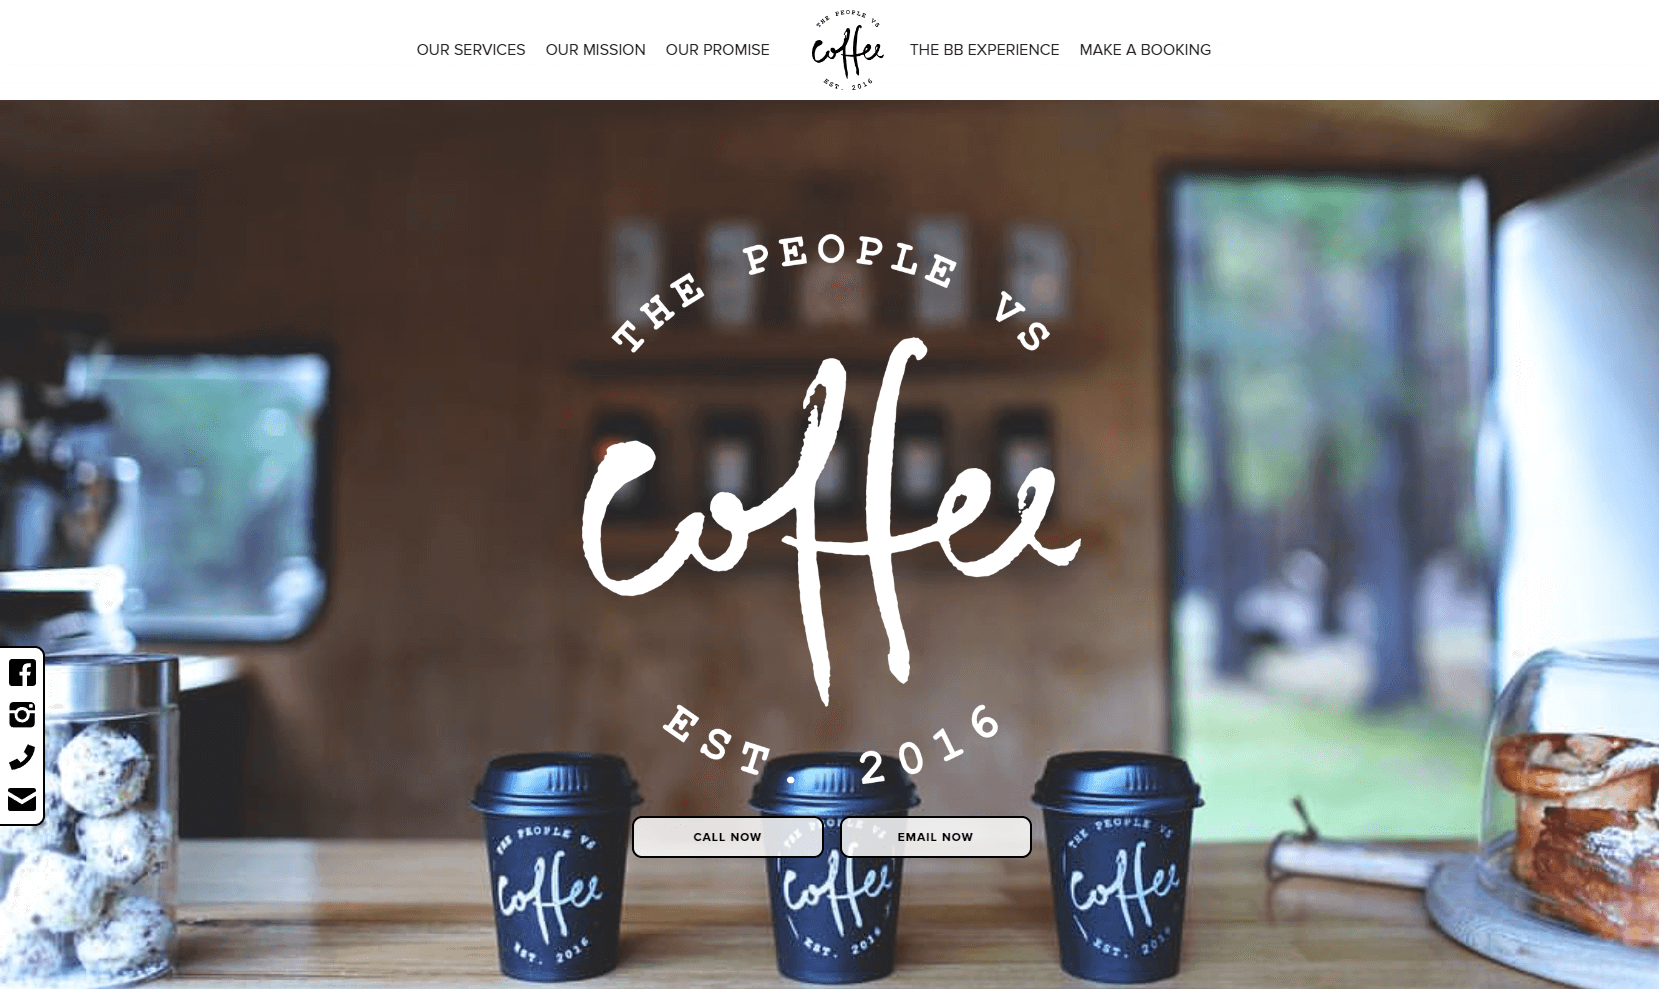 The Peoples Coffee Website